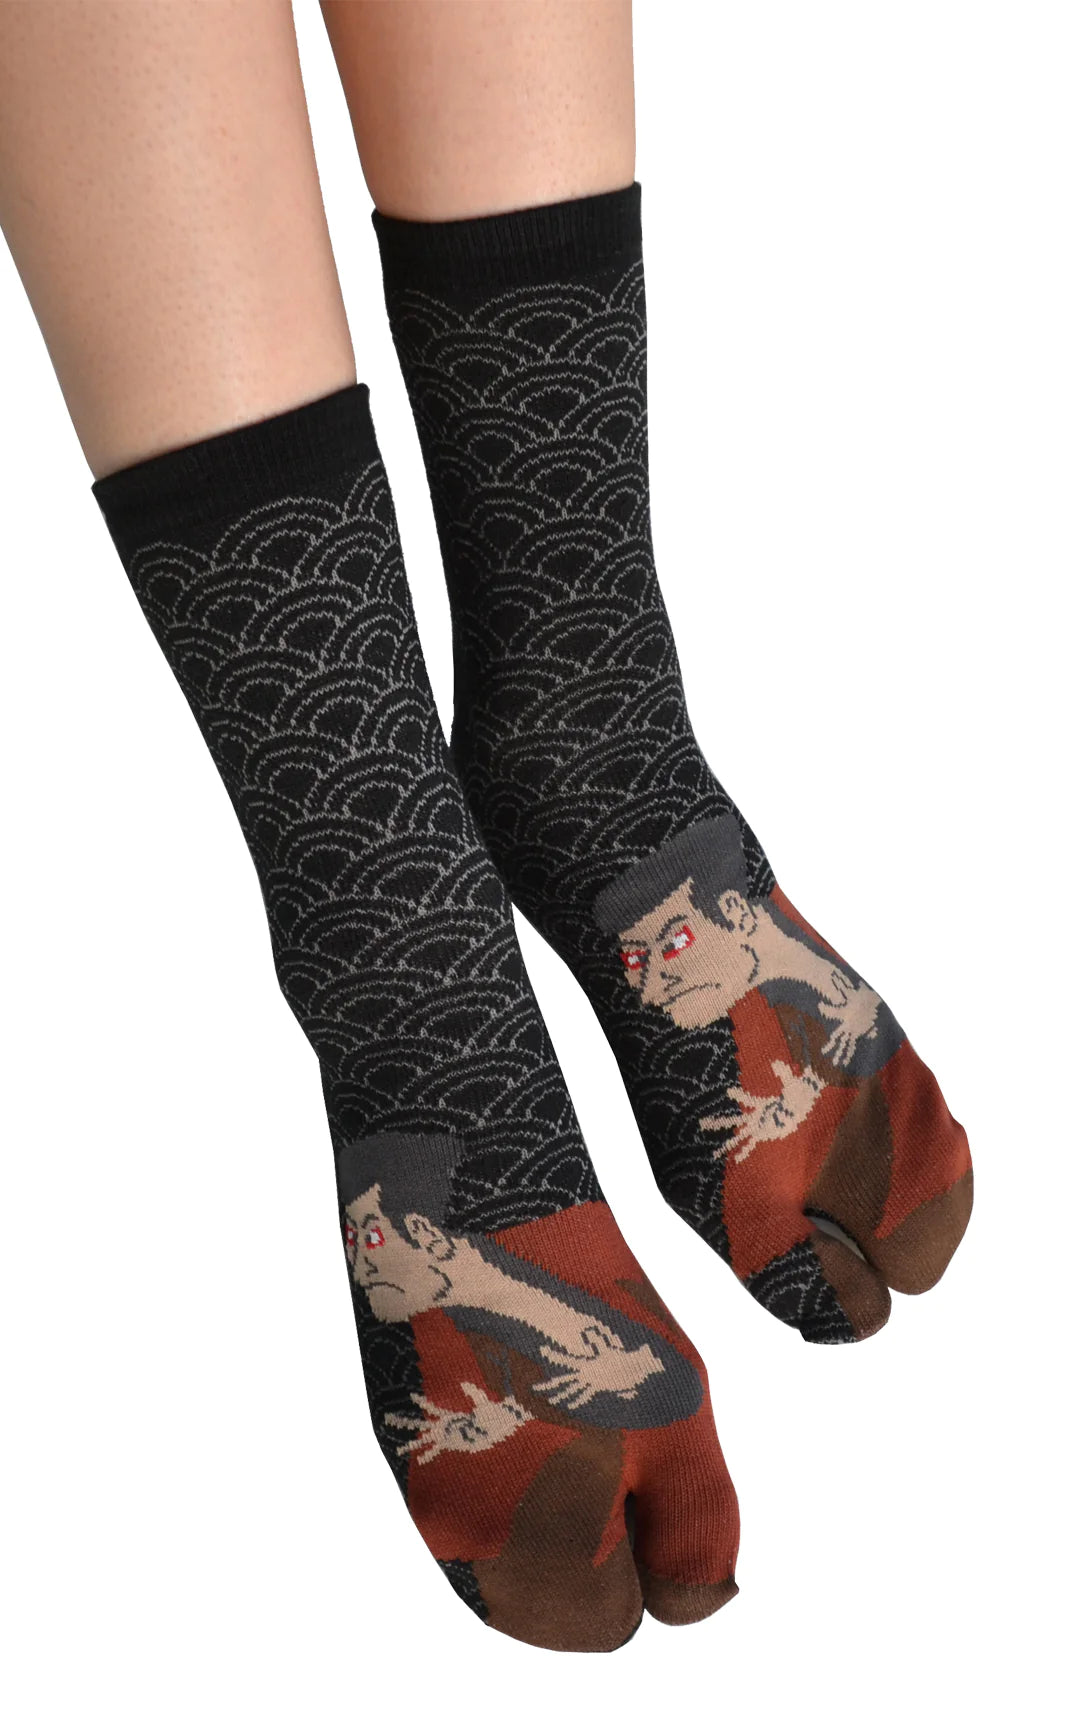 A woman is wearing KABUKI TABI TOE SOCKS Black, a product name inspired by Japanese Kabuki by NINJA SOCKS